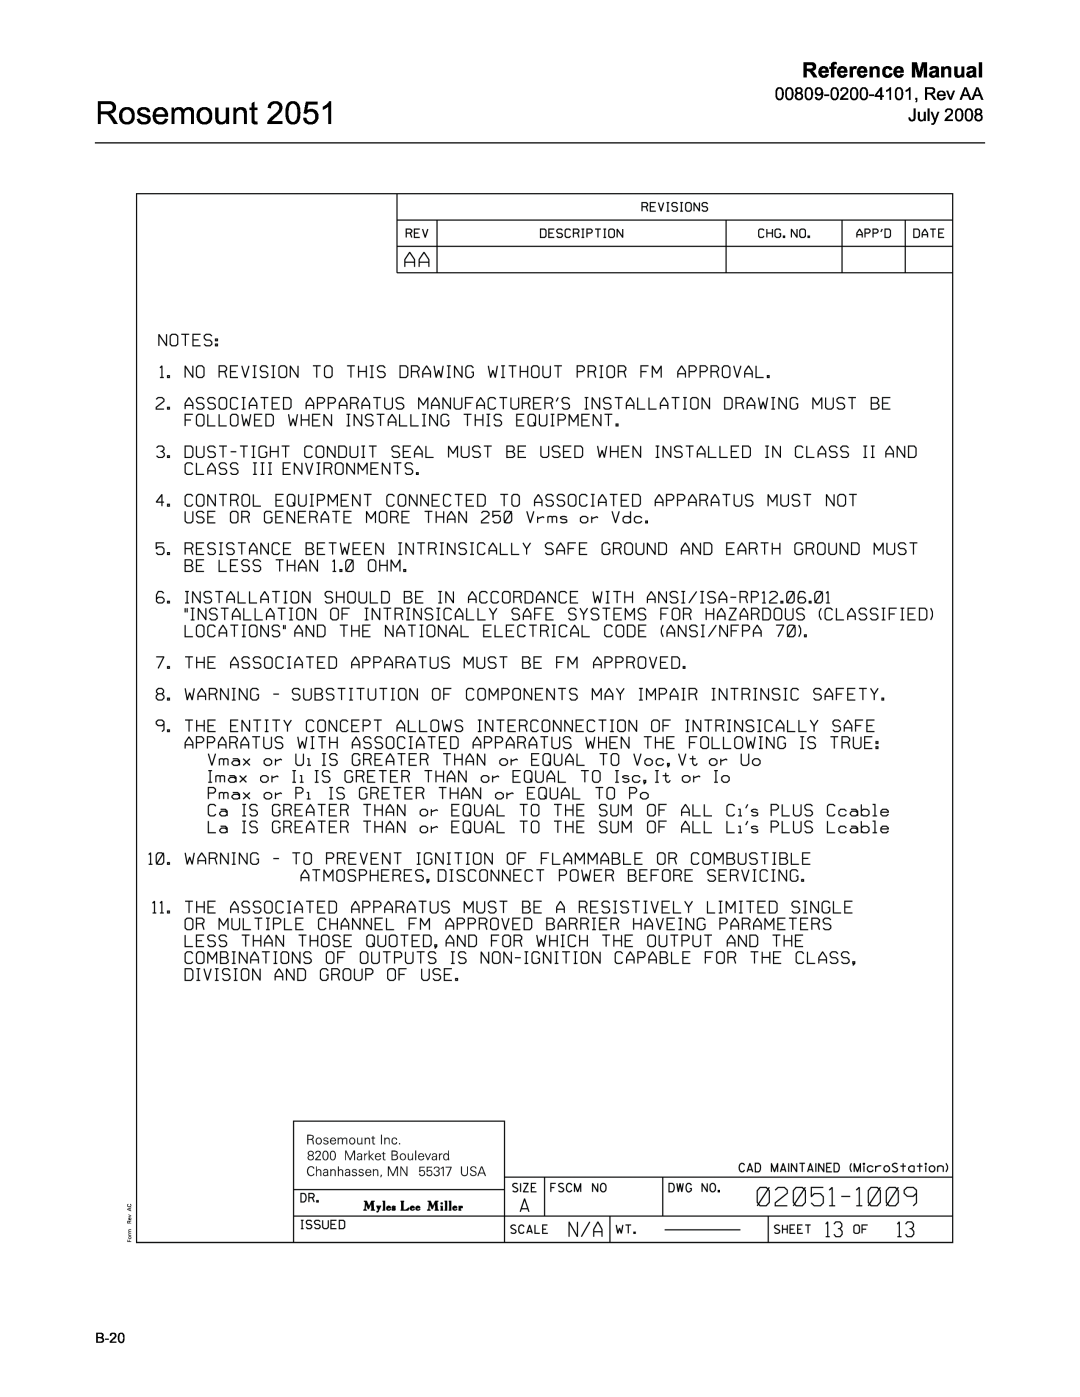 Emerson Process Management 2051 manual Rosemount, Reference Manual, B-20 